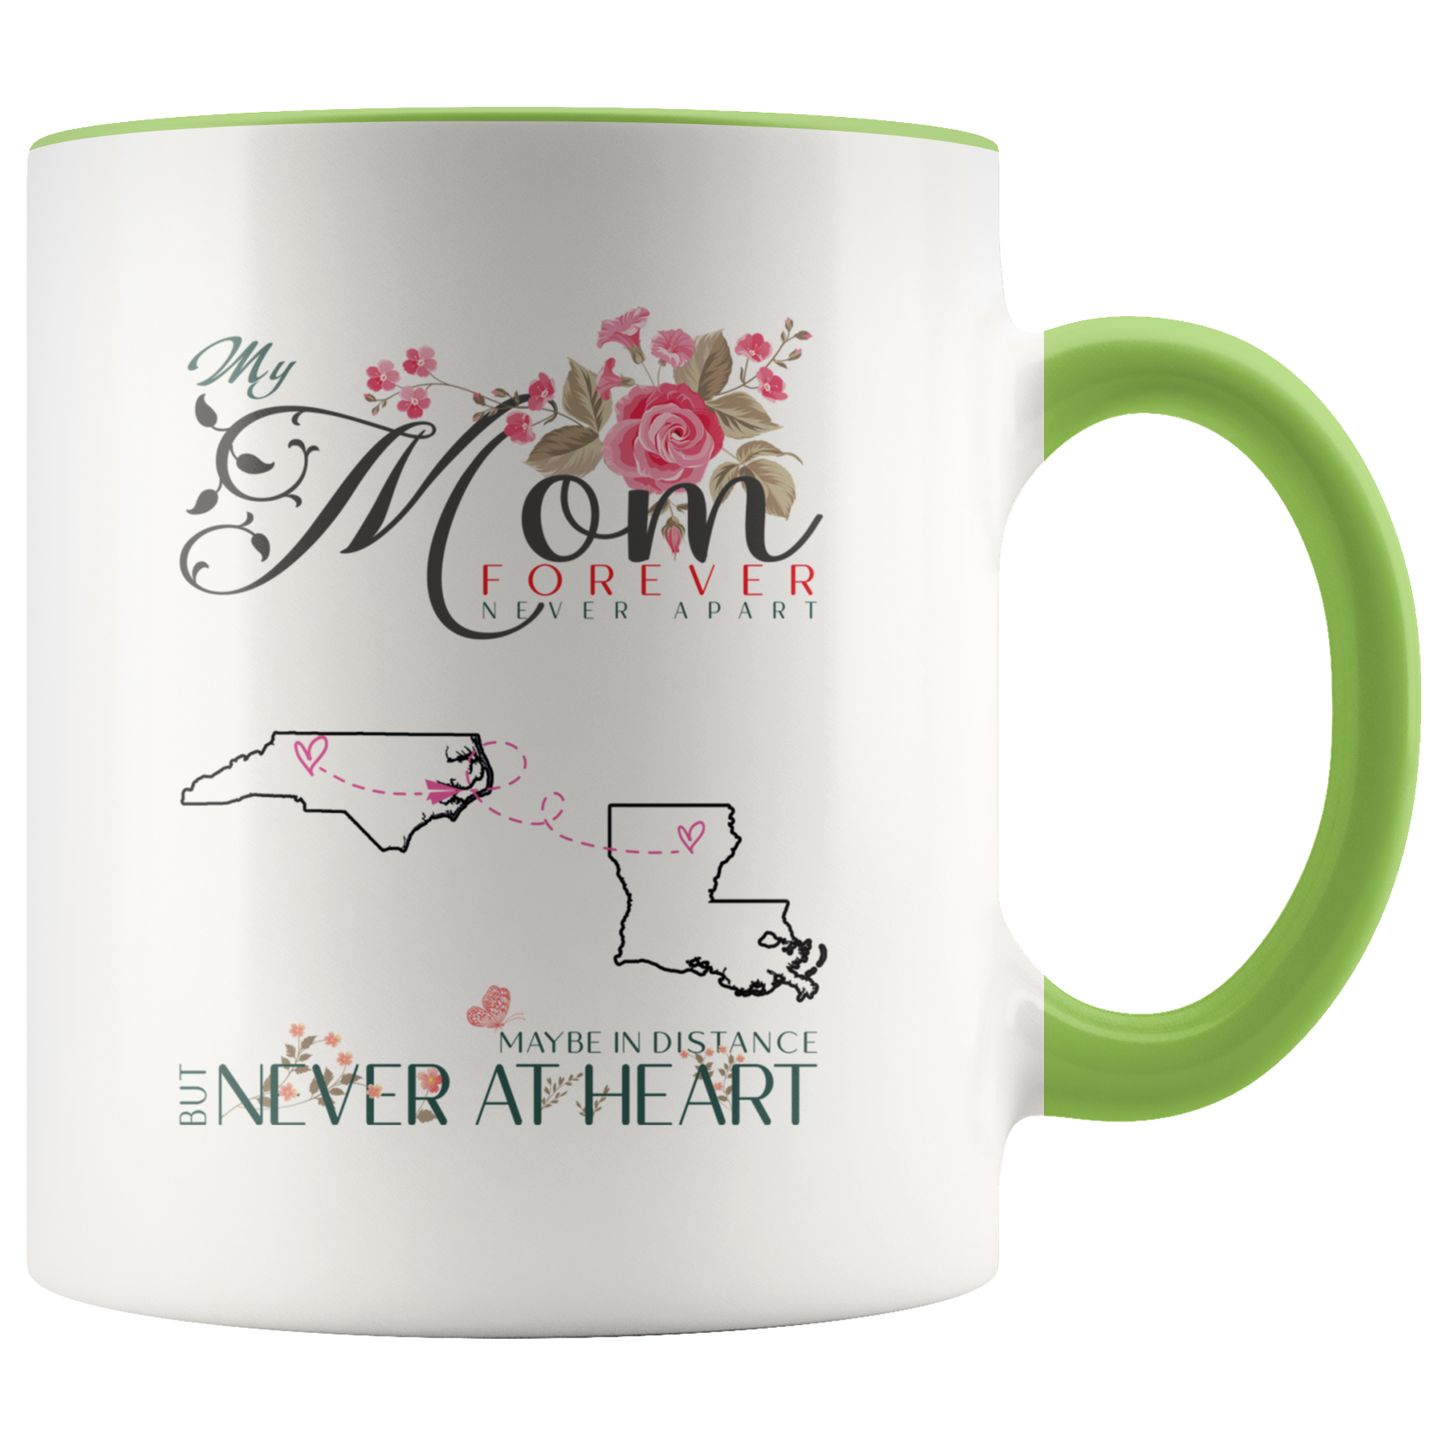 M-20321571-sp-26551 - [ North Carolina | Louisiana ] (CC_Accent_Mug_) Personalized Mothers Day Coffee Mug - My Mom Forever Never A